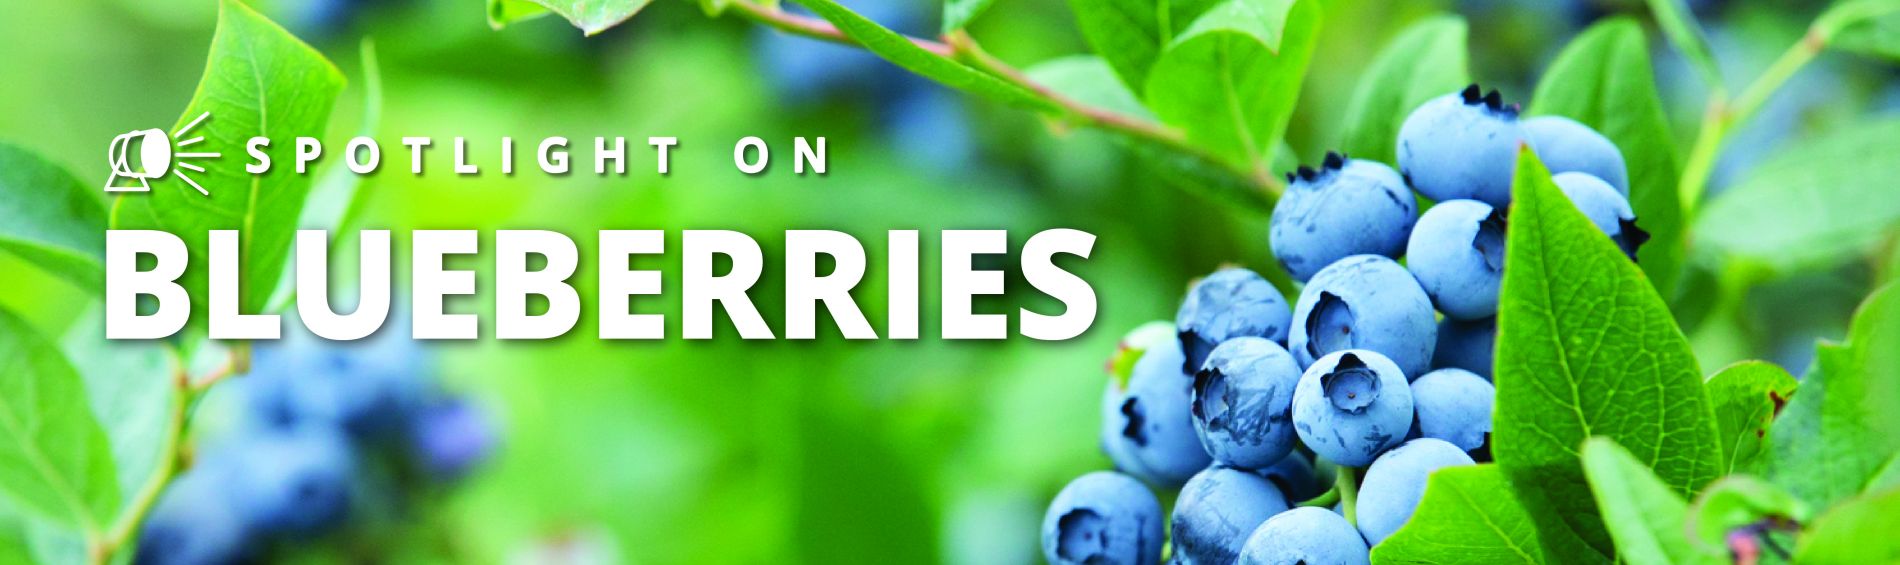 Spotlight Series on Blueberries